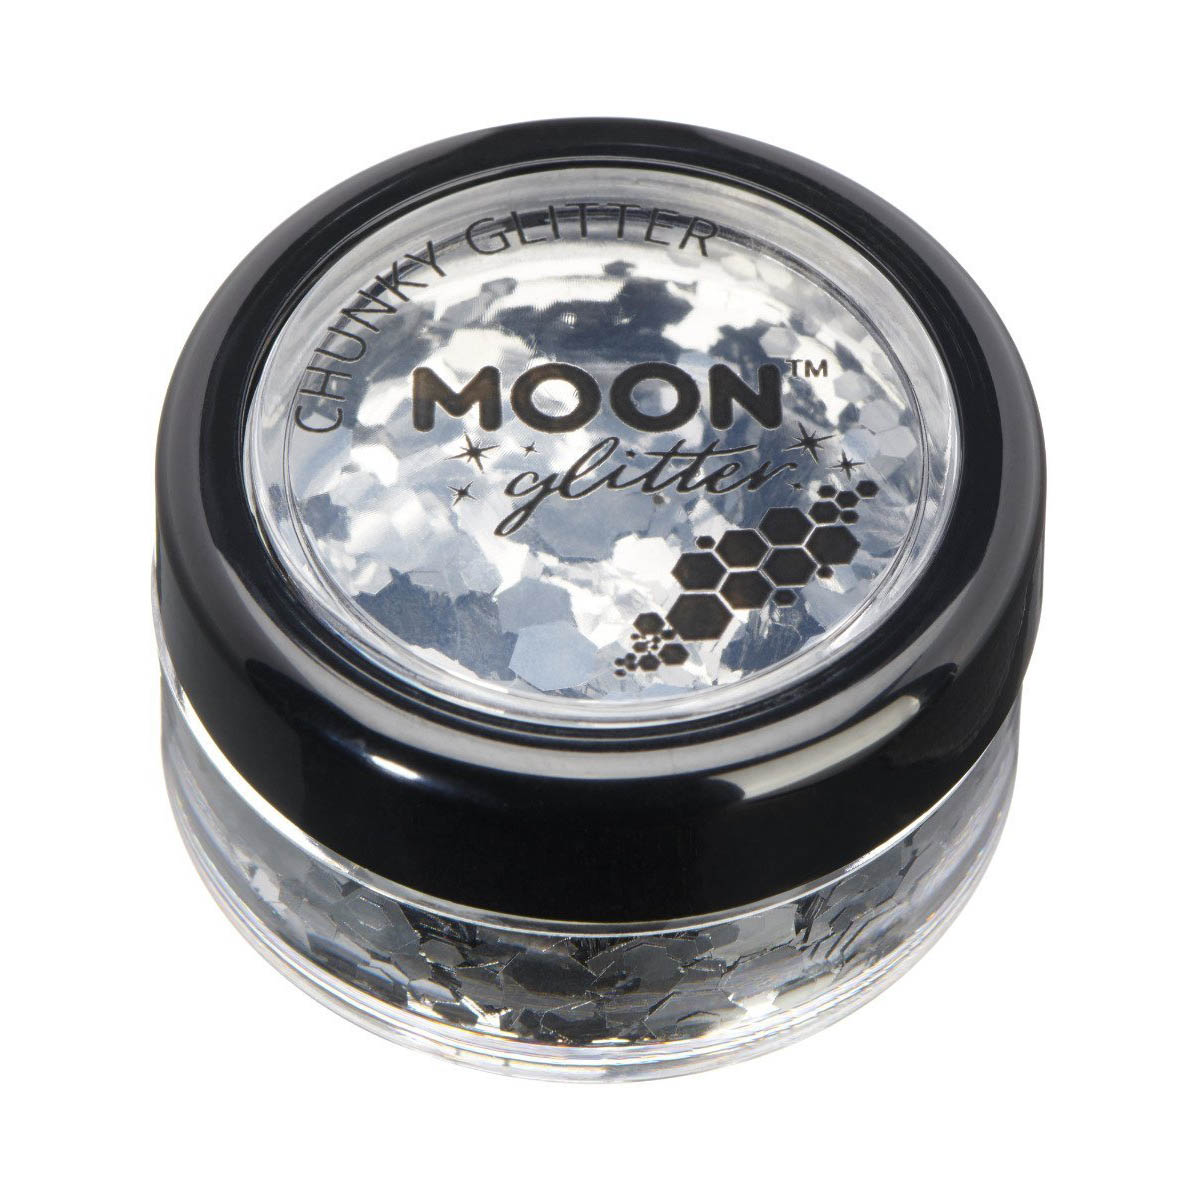 Moon kroppsglitter chunky 5g Silver